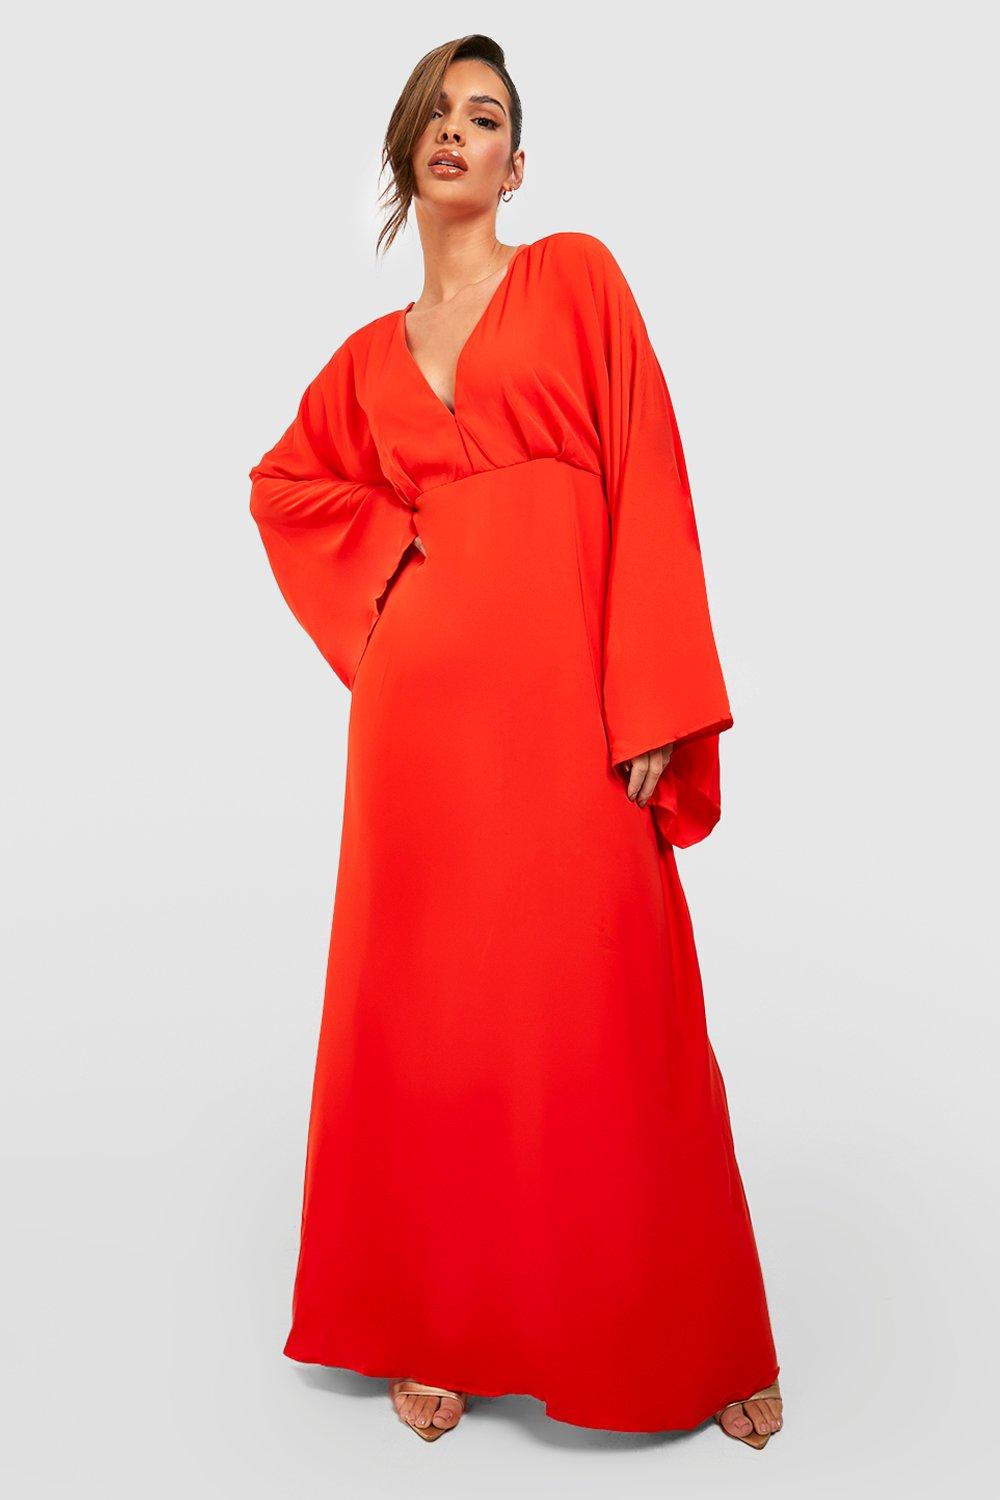 1970s Formal Dress, Evening Gown Photos Womens Plunge Wide Sleeve Maxi Dress - Orange - 14 $32.00 AT vintagedancer.com